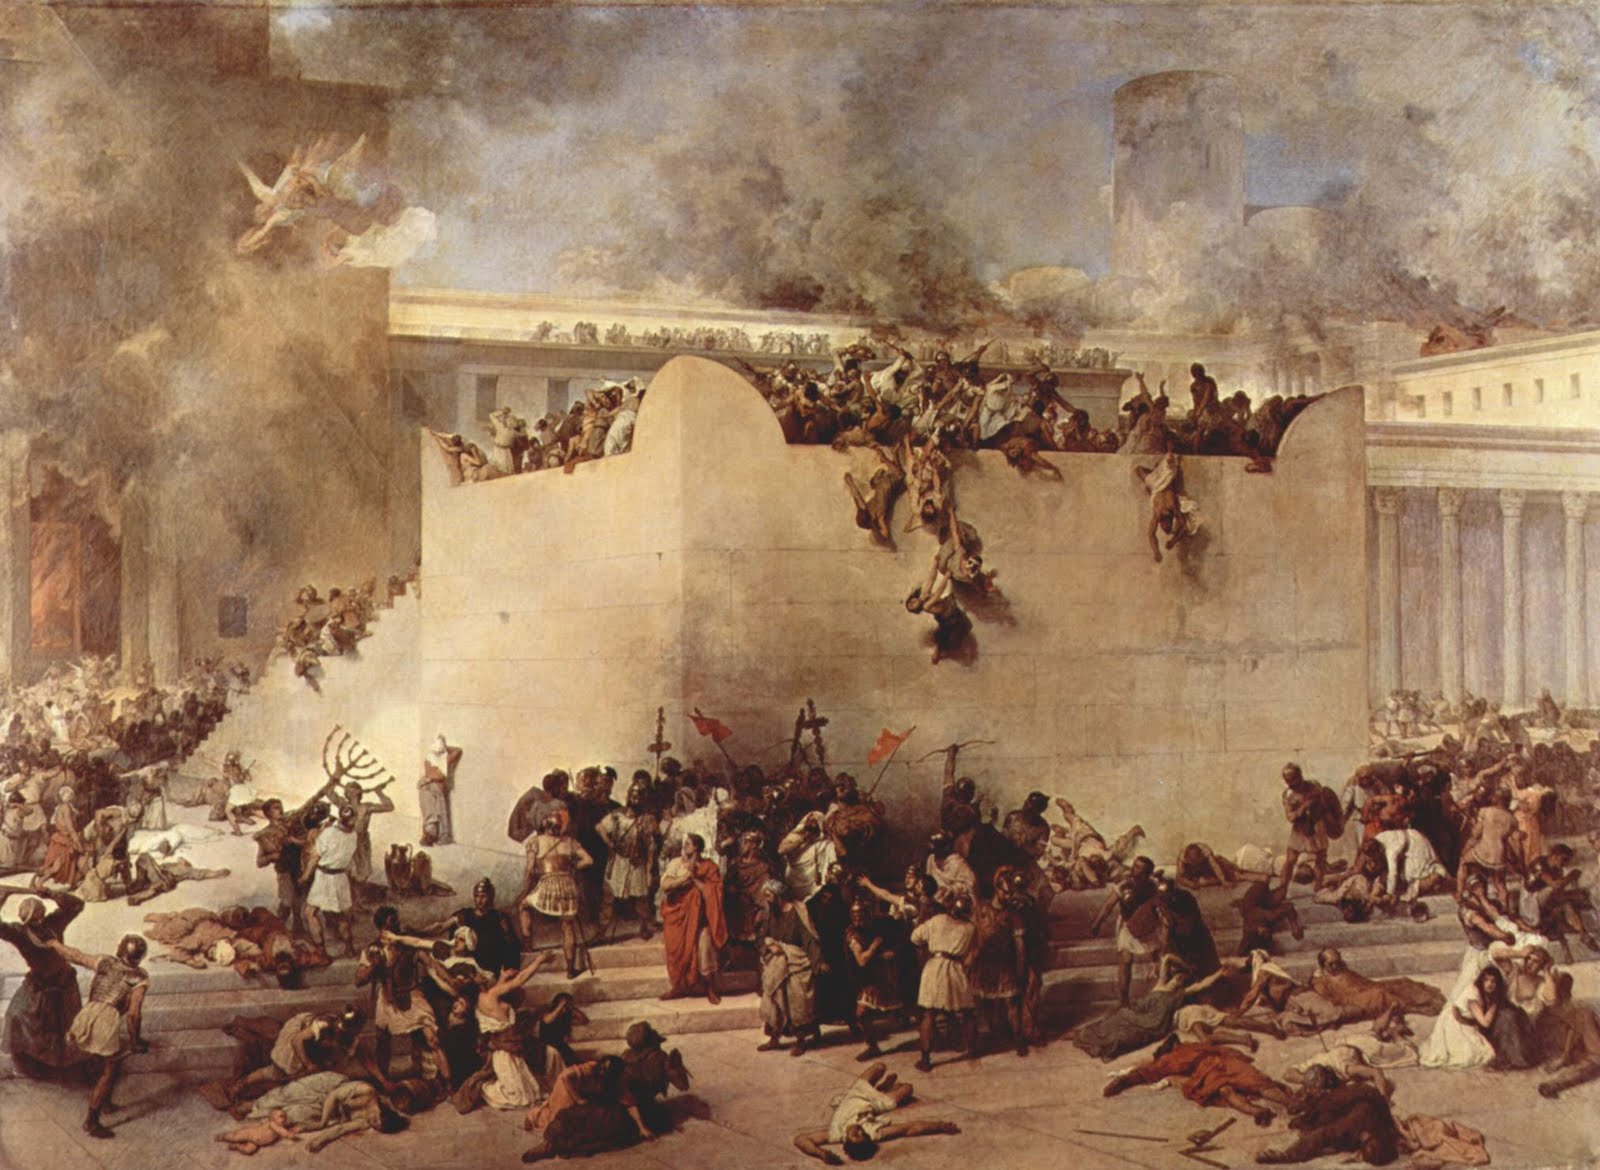 http://3.bp.blogspot.com/_nr7WwS5-68Q/TN6ssf7JkSI/AAAAAAAAA8U/p-_jrRsXIx0/s1600/francesco-hayez-the-destruction-of-the-temple-of-jerusalem-1867.jpg